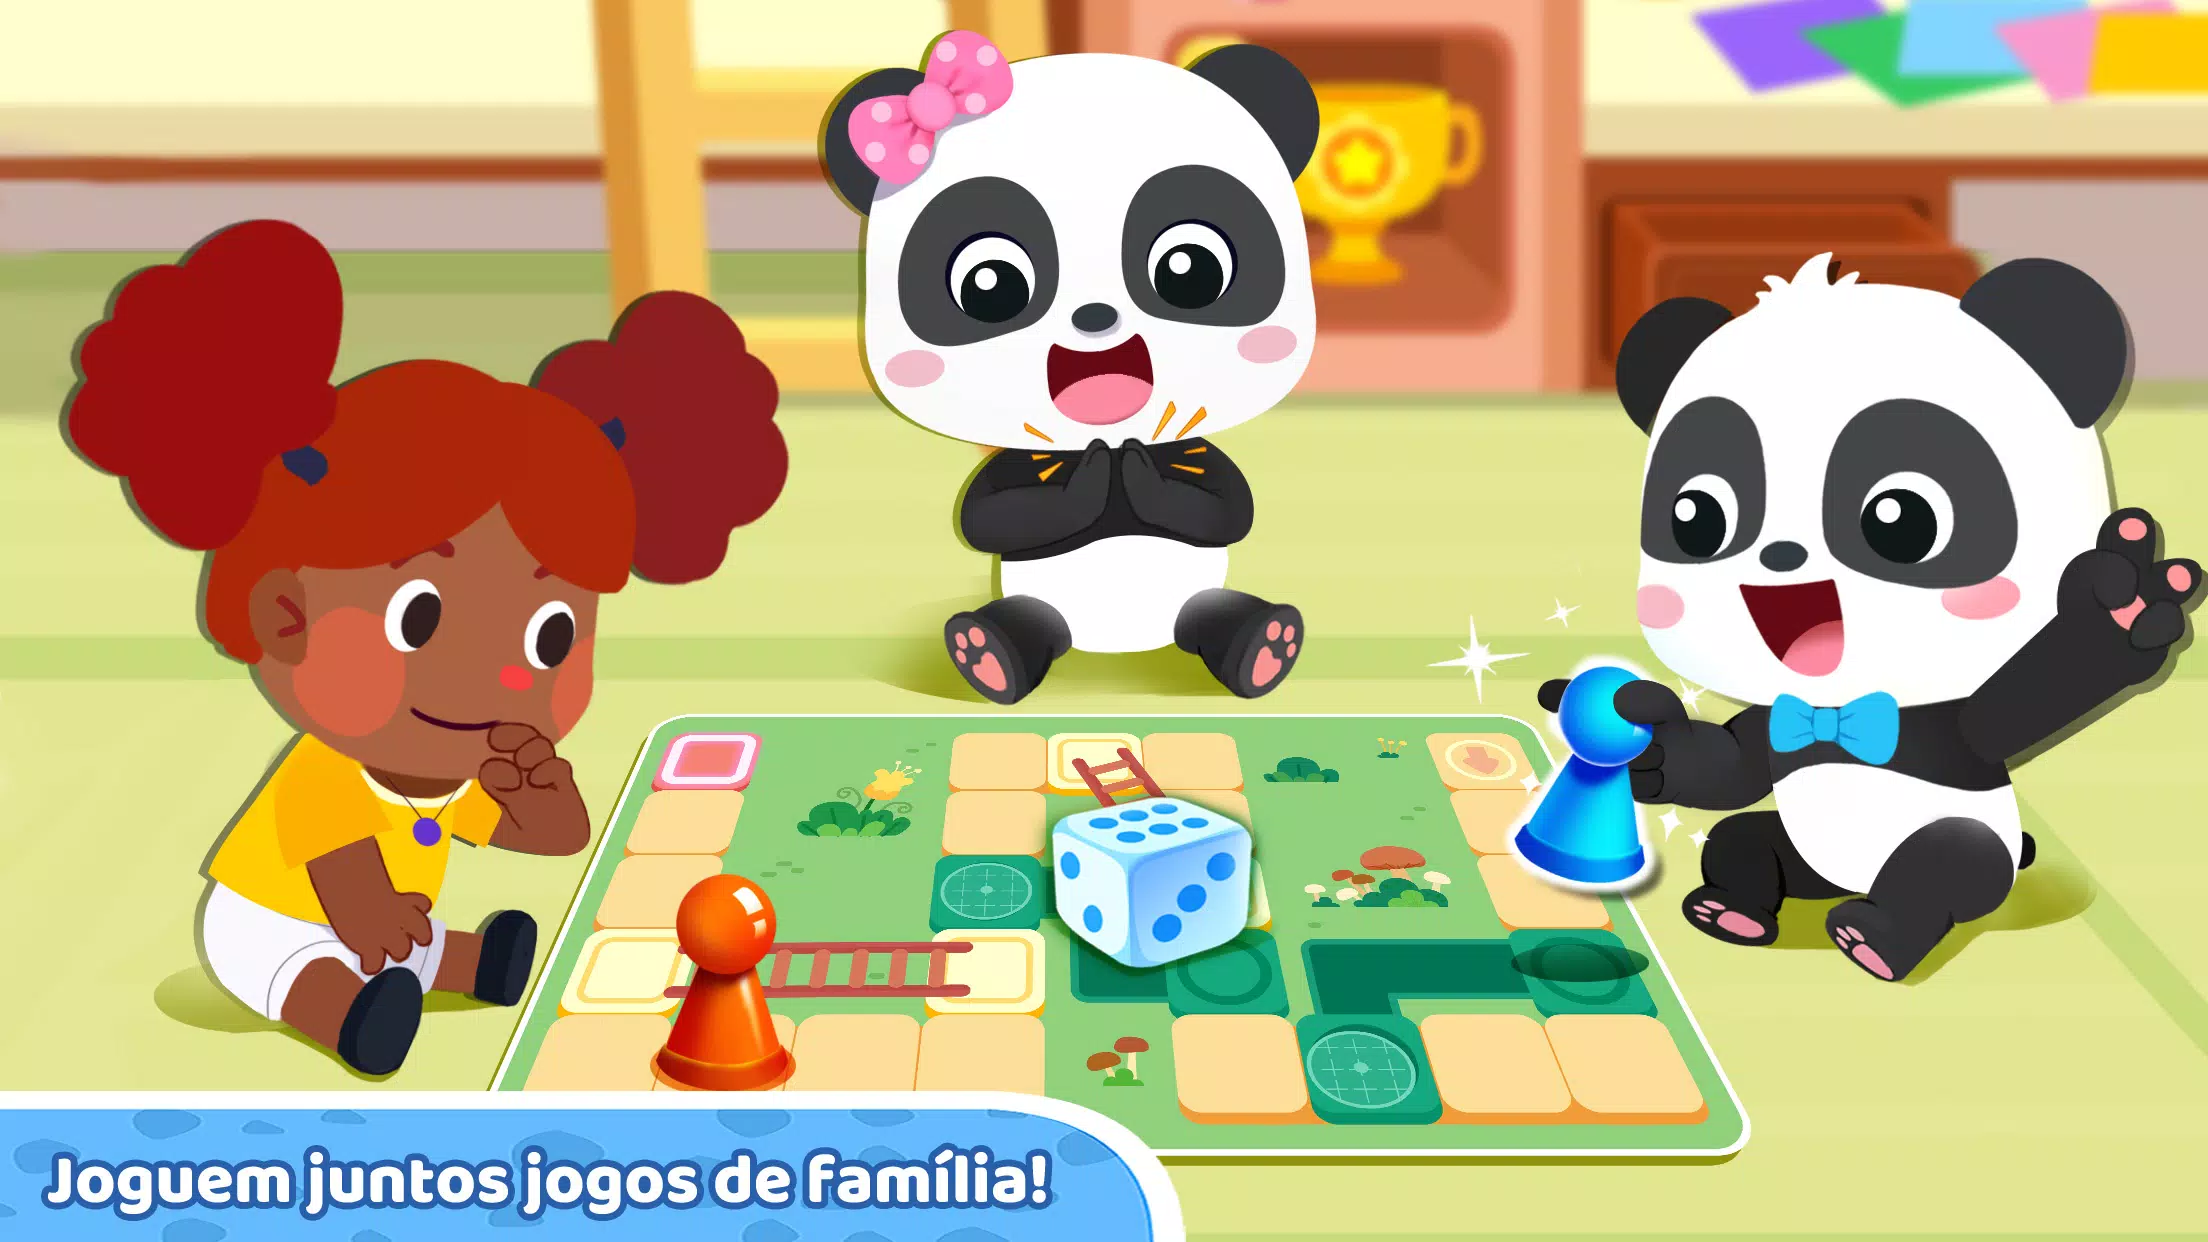 CRECHE DO BEBÊ PANDA - Vamos Brincar Juntos com Kiki e Miumiu